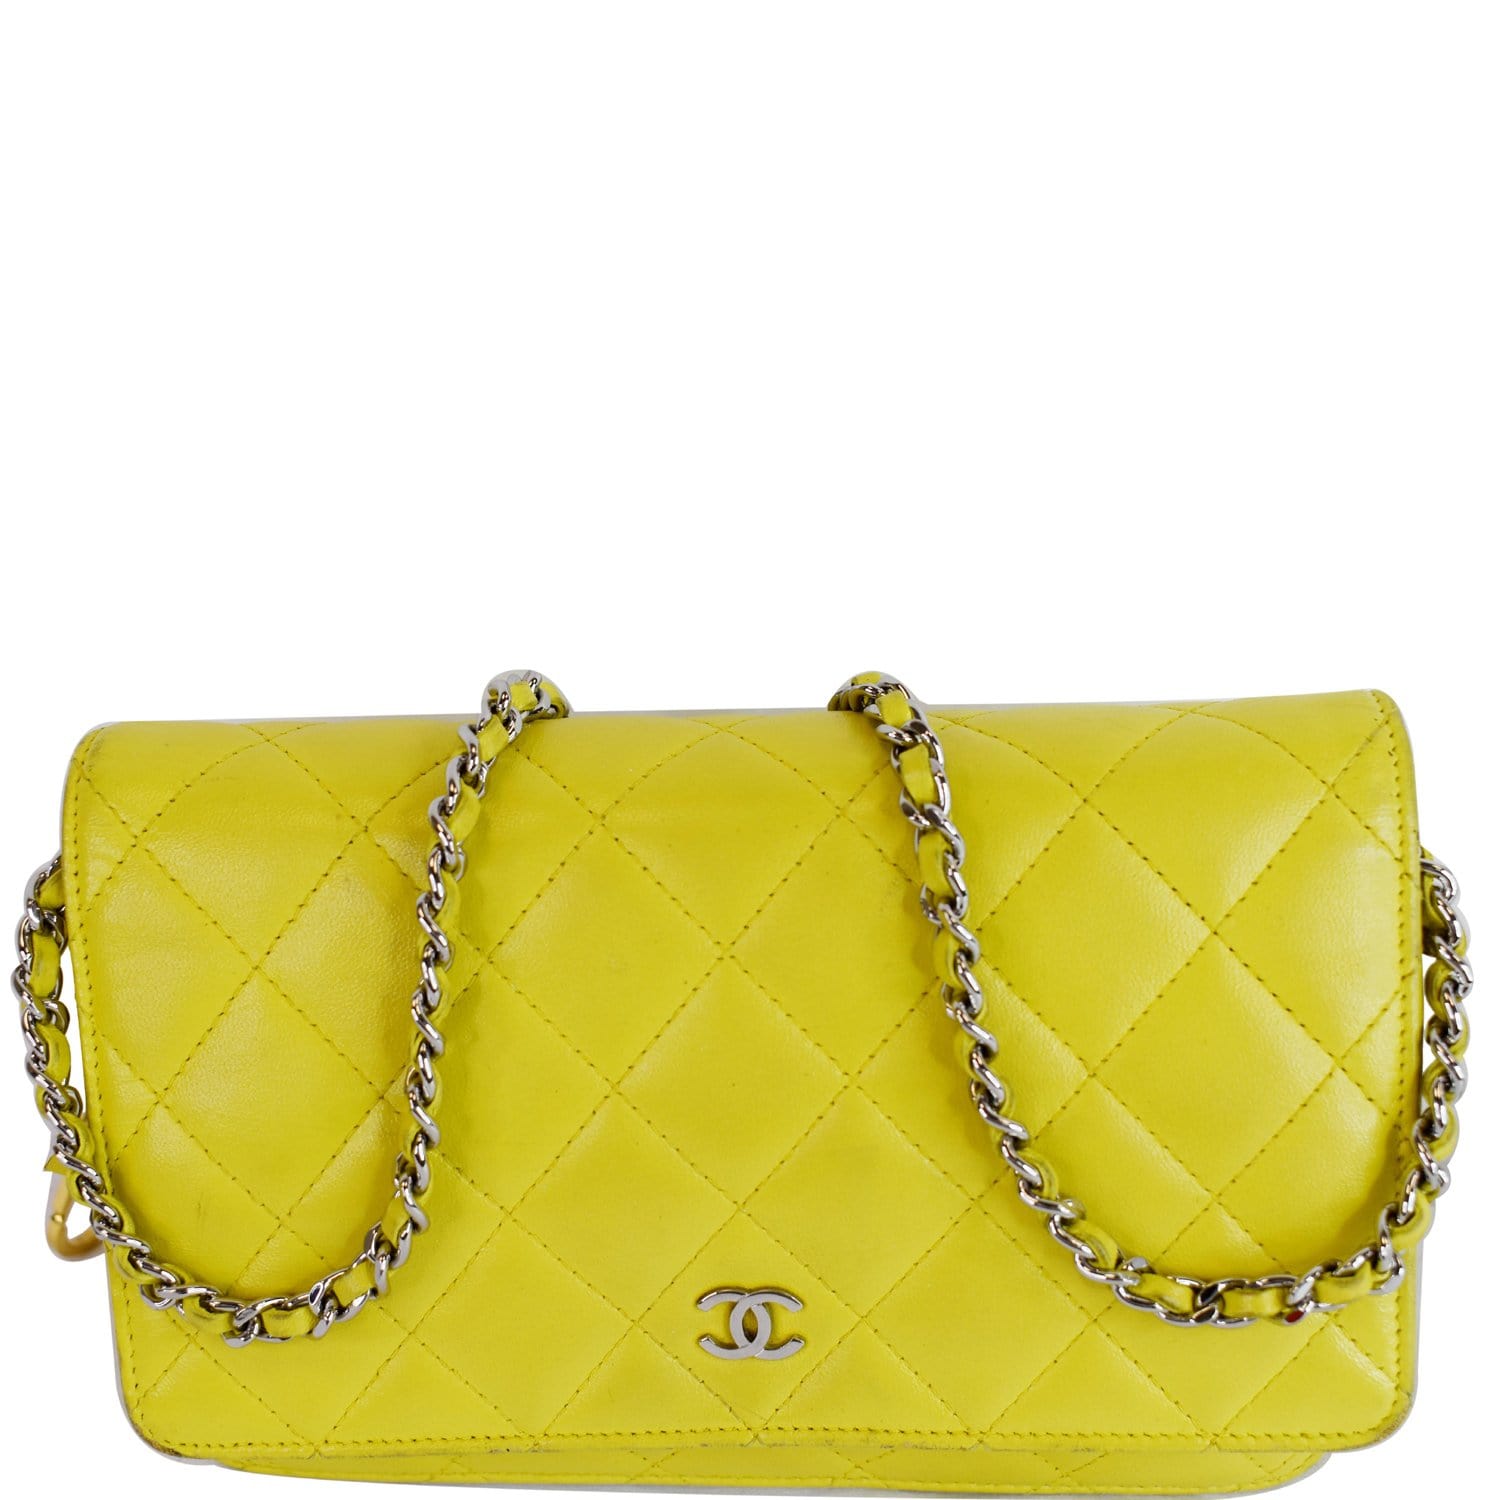 Chanel WOC Yellow Bag